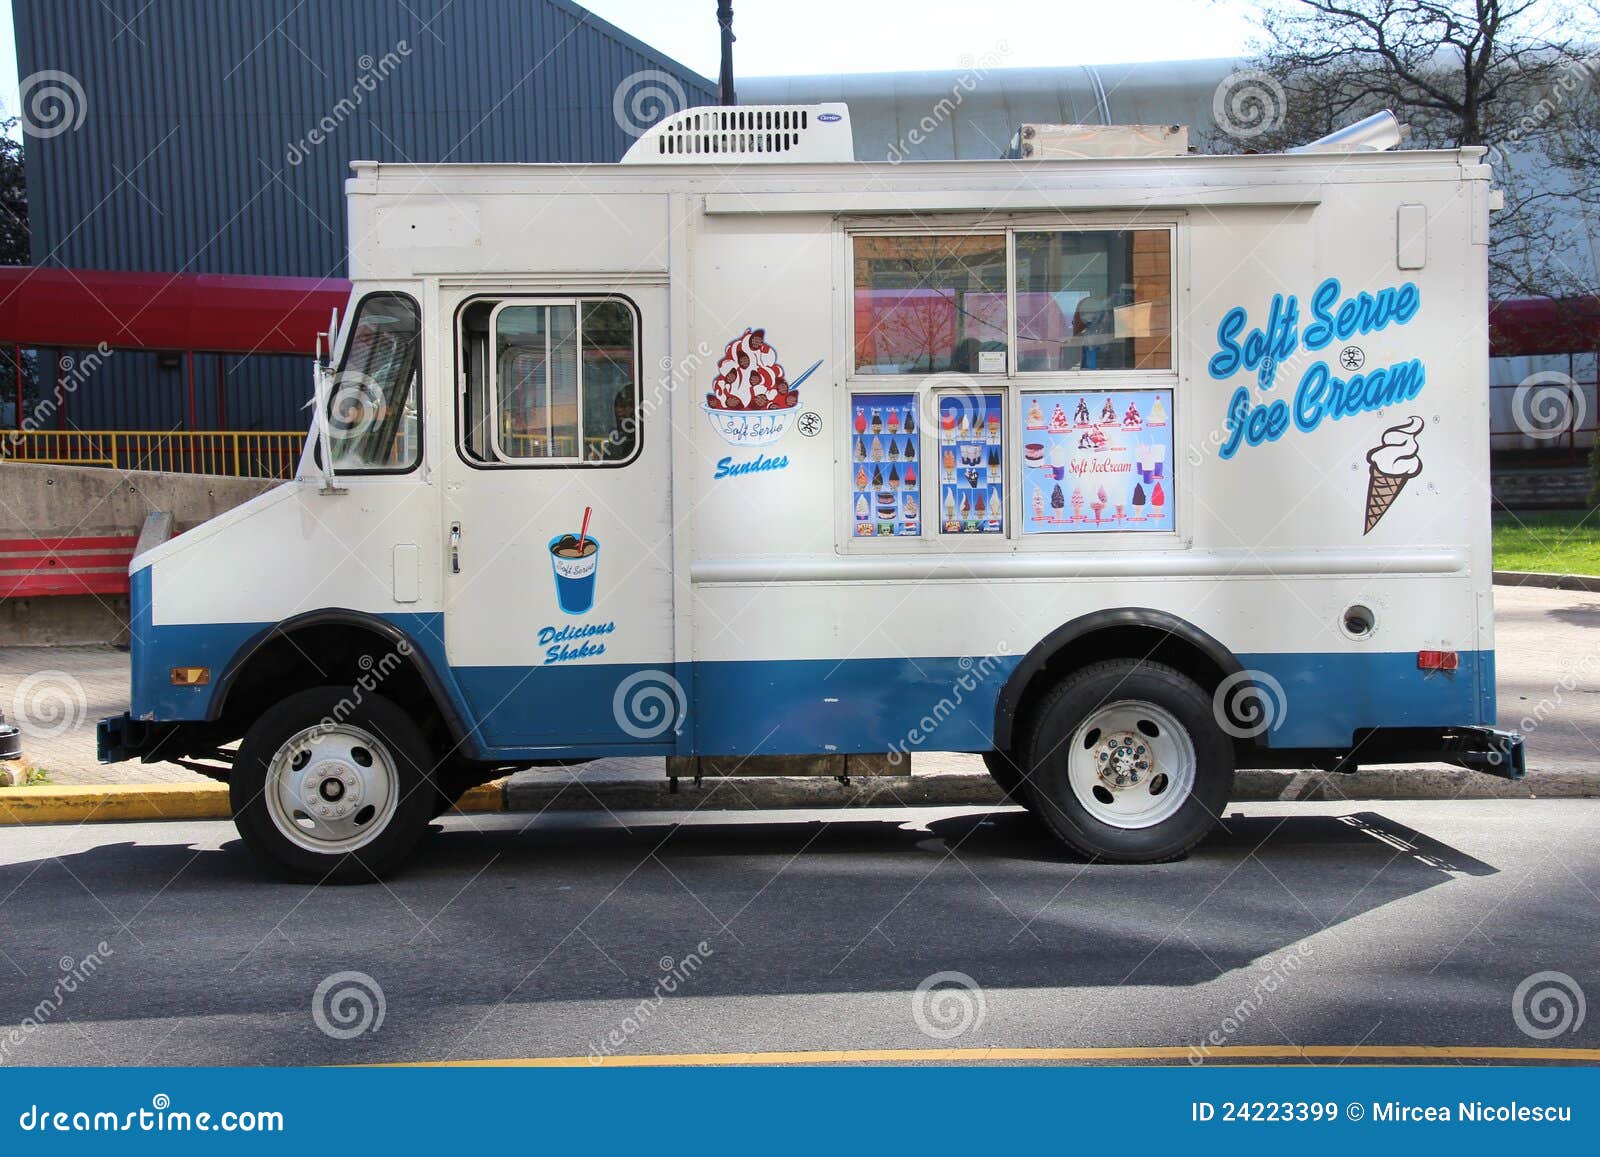 ice cream truck business plan free